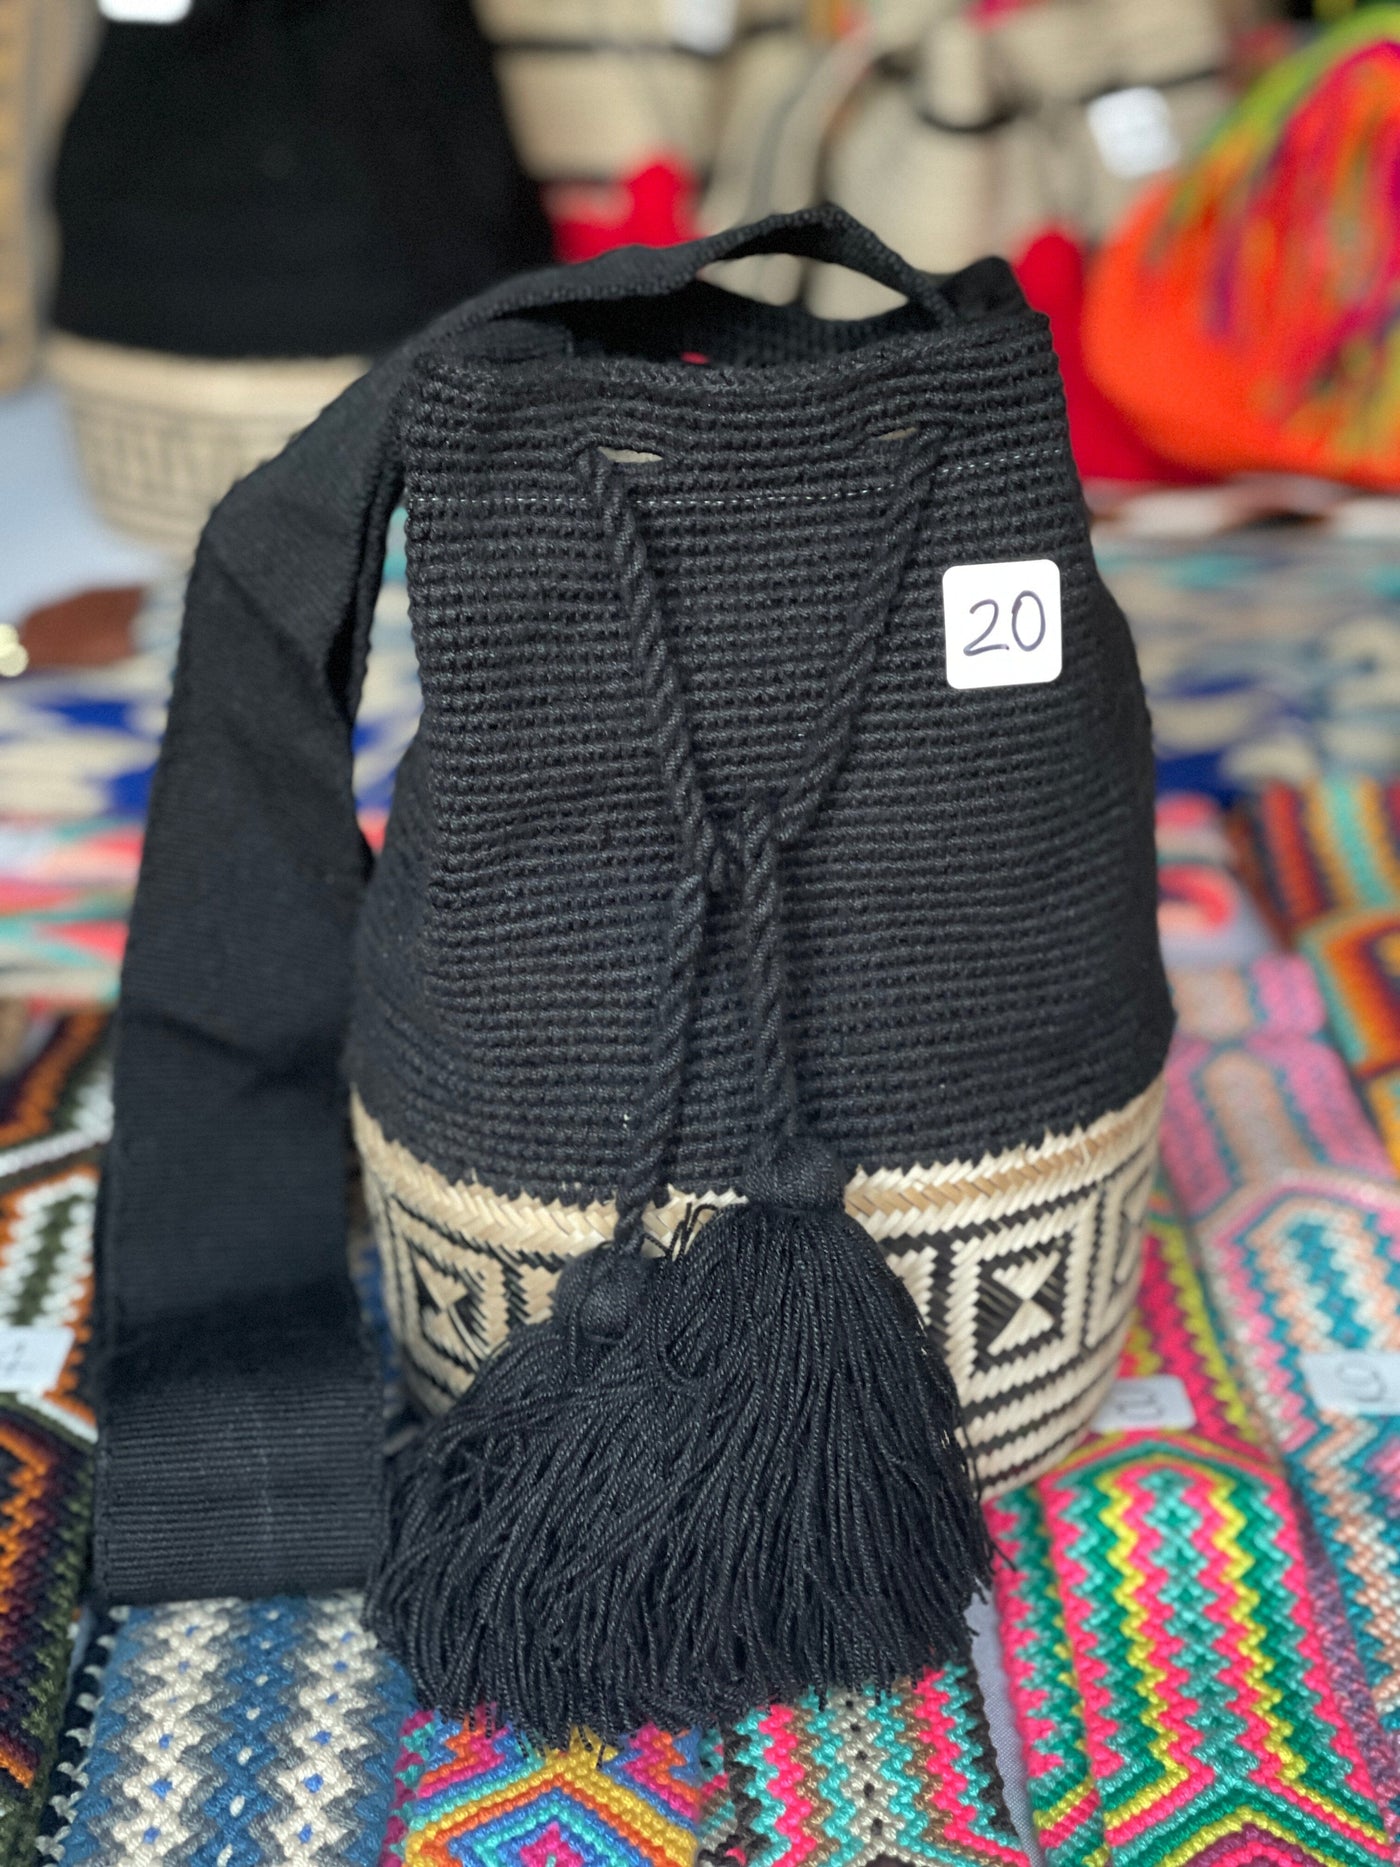 New Arrivals -Large Bohemian Bags & Special Edition Crochet Bags Crossbody Crochet Boho Bag - Traditional Wayuu Design #20 Black Straw Bottom 